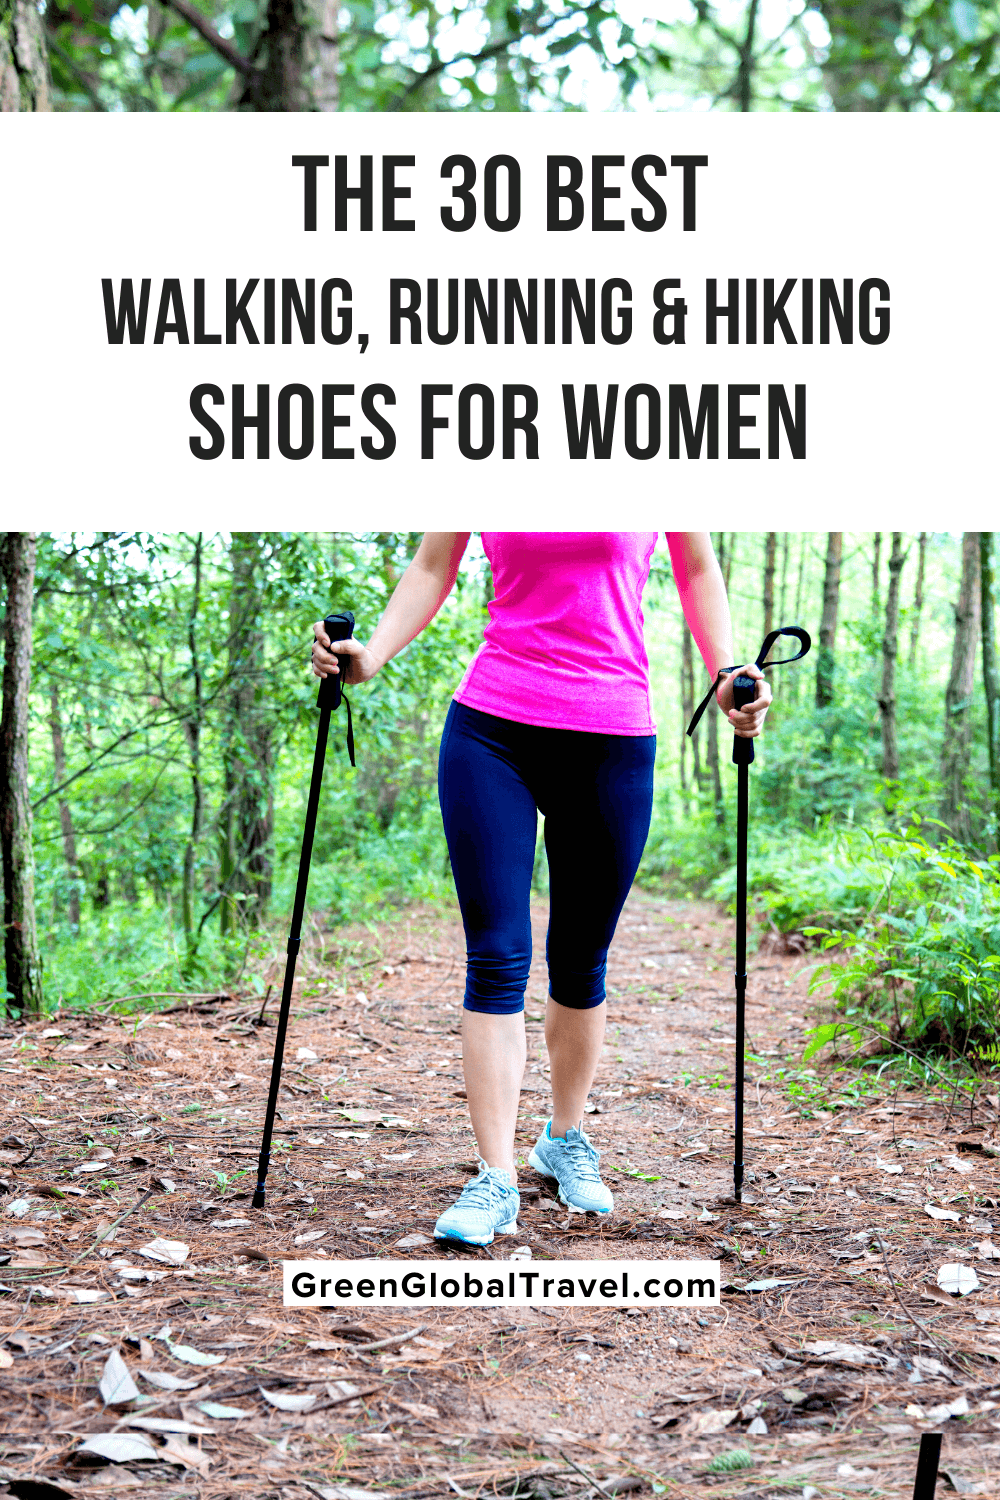 MIOKE Womens Casual Walking Running Sport Shoes Waterproof Non-Slip Trail Backpacking Outdoor Hiking Shoes 